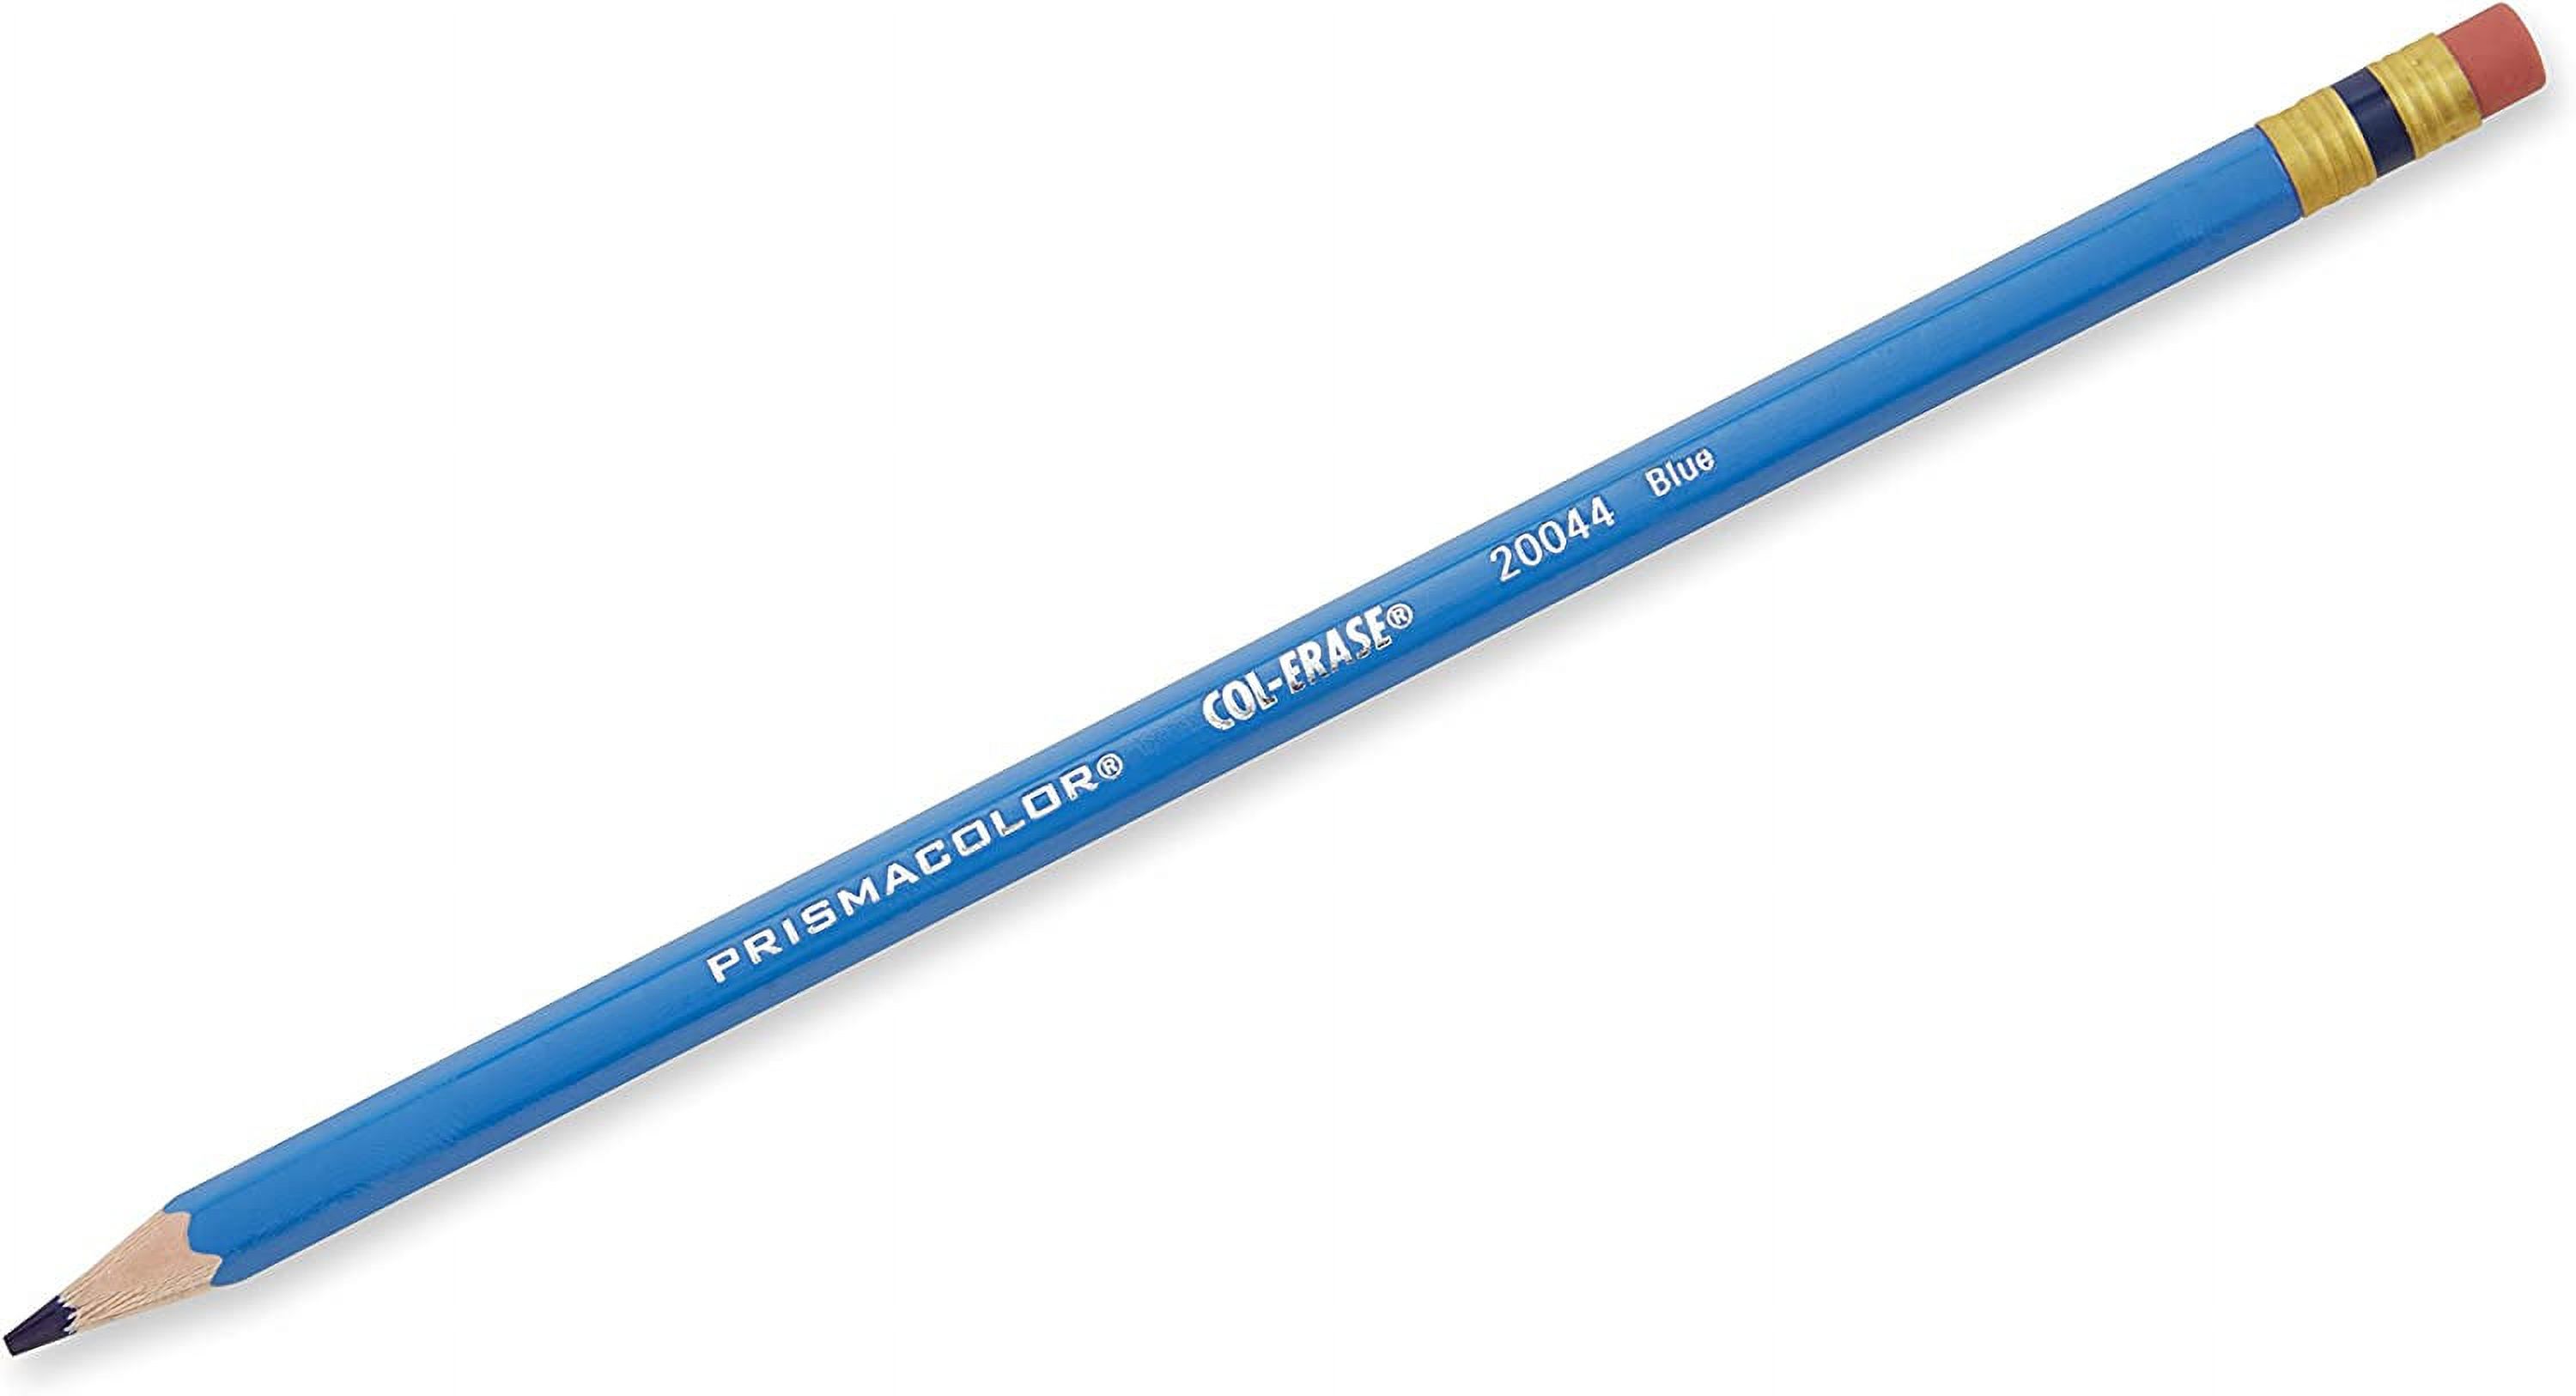 Prismacolor Col-Erase Erasable Colored Pencil 24-Count Assorted Colors